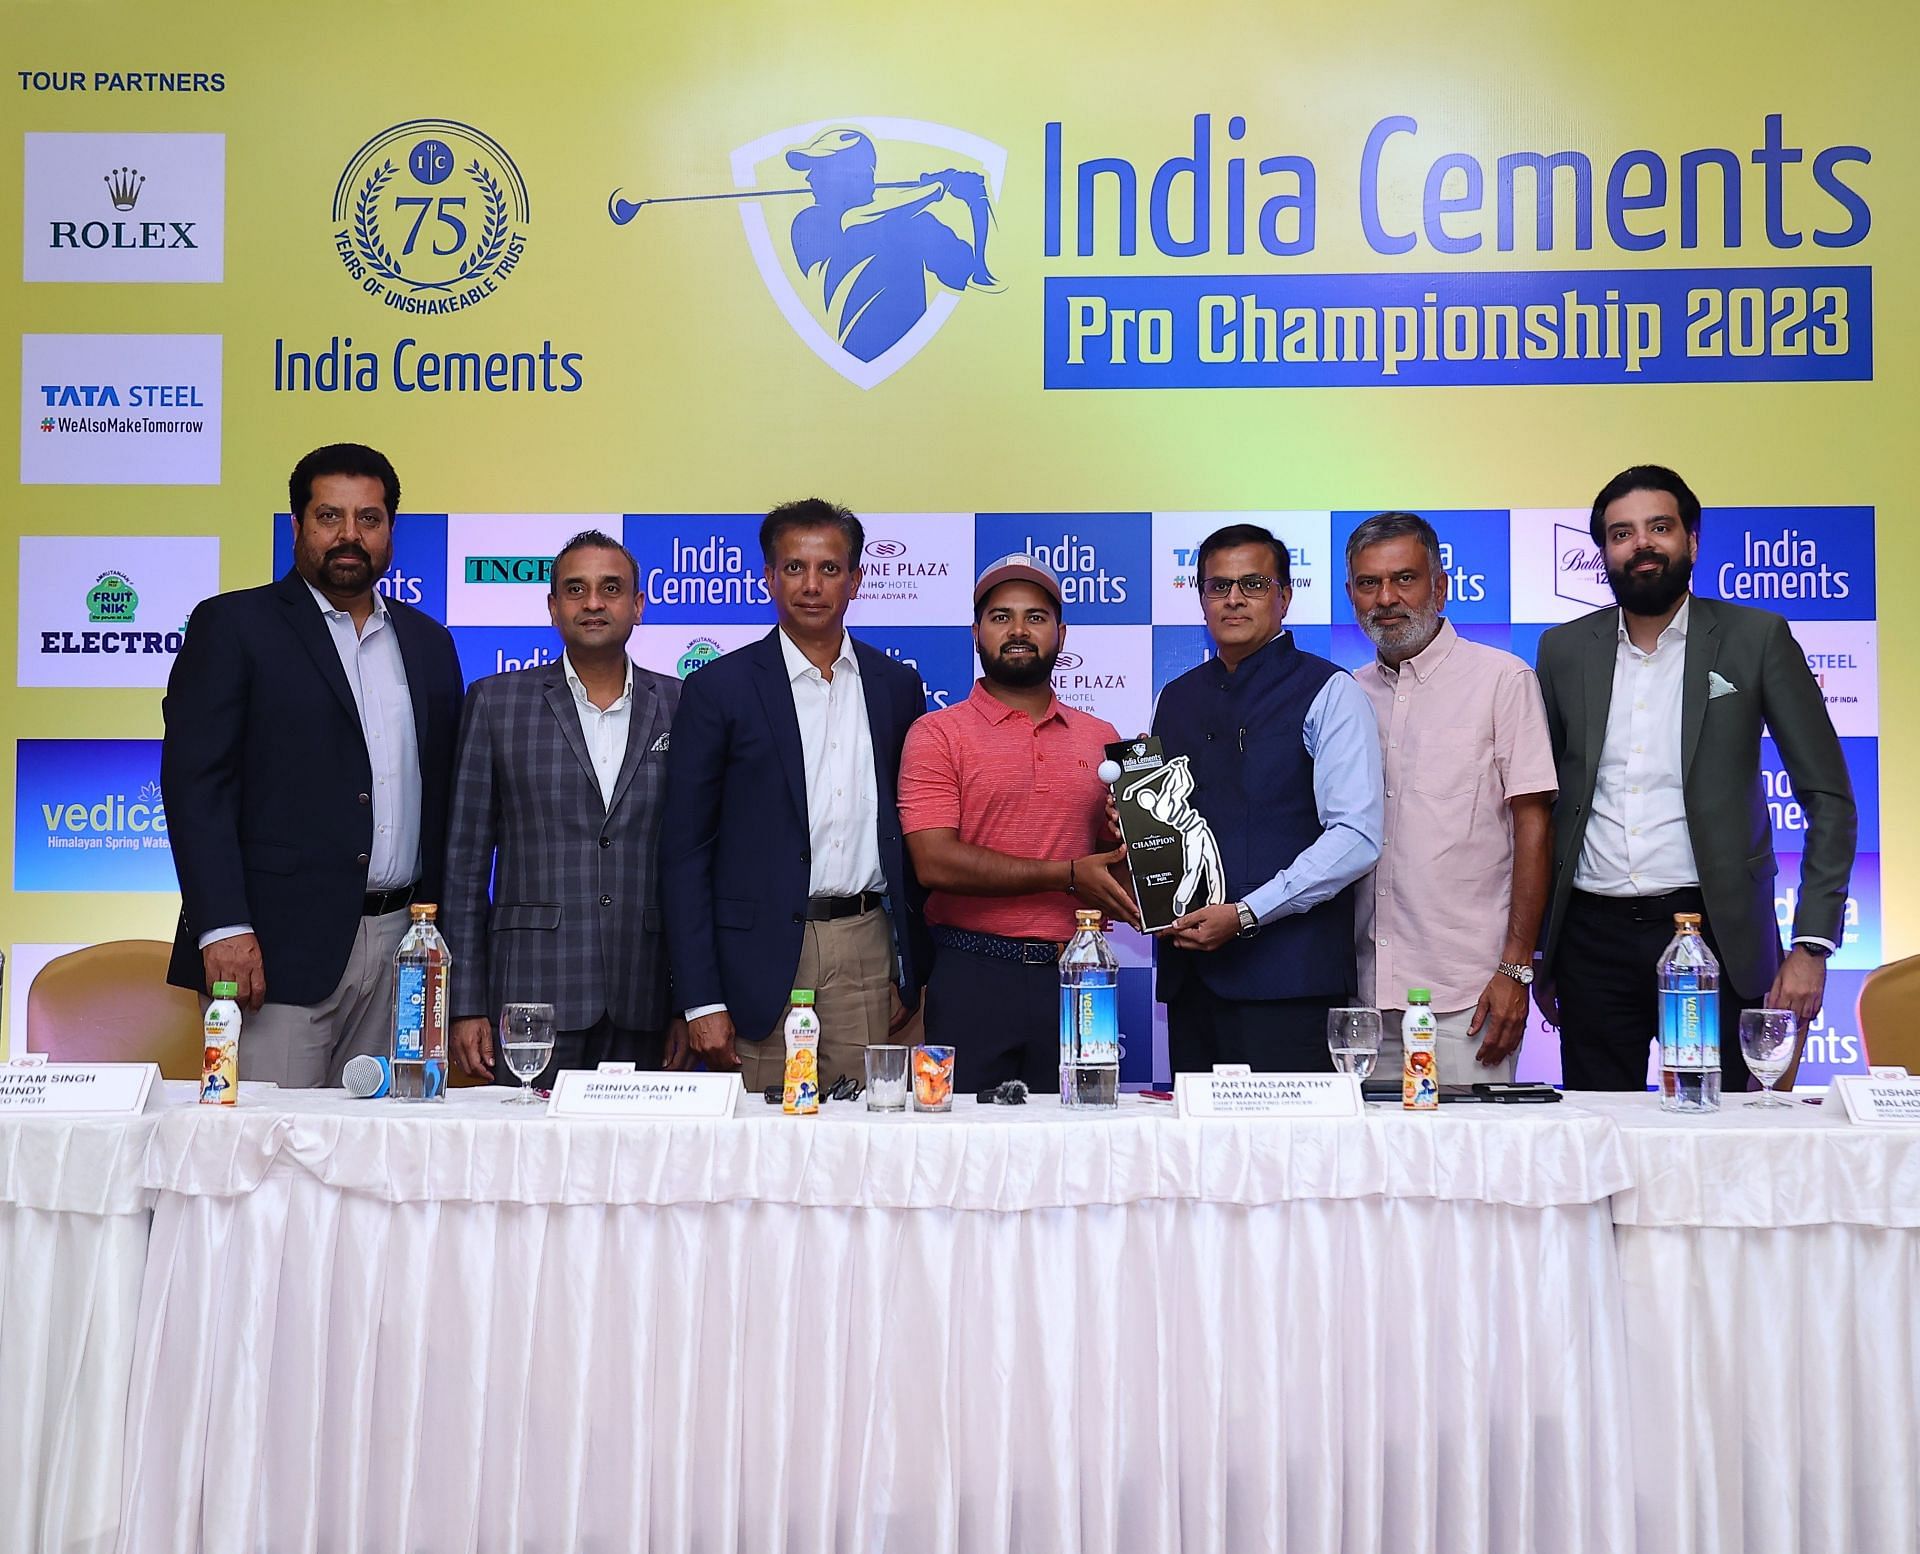 India Cements Pro Championship 2023 ( Image via pgtofindia.com)